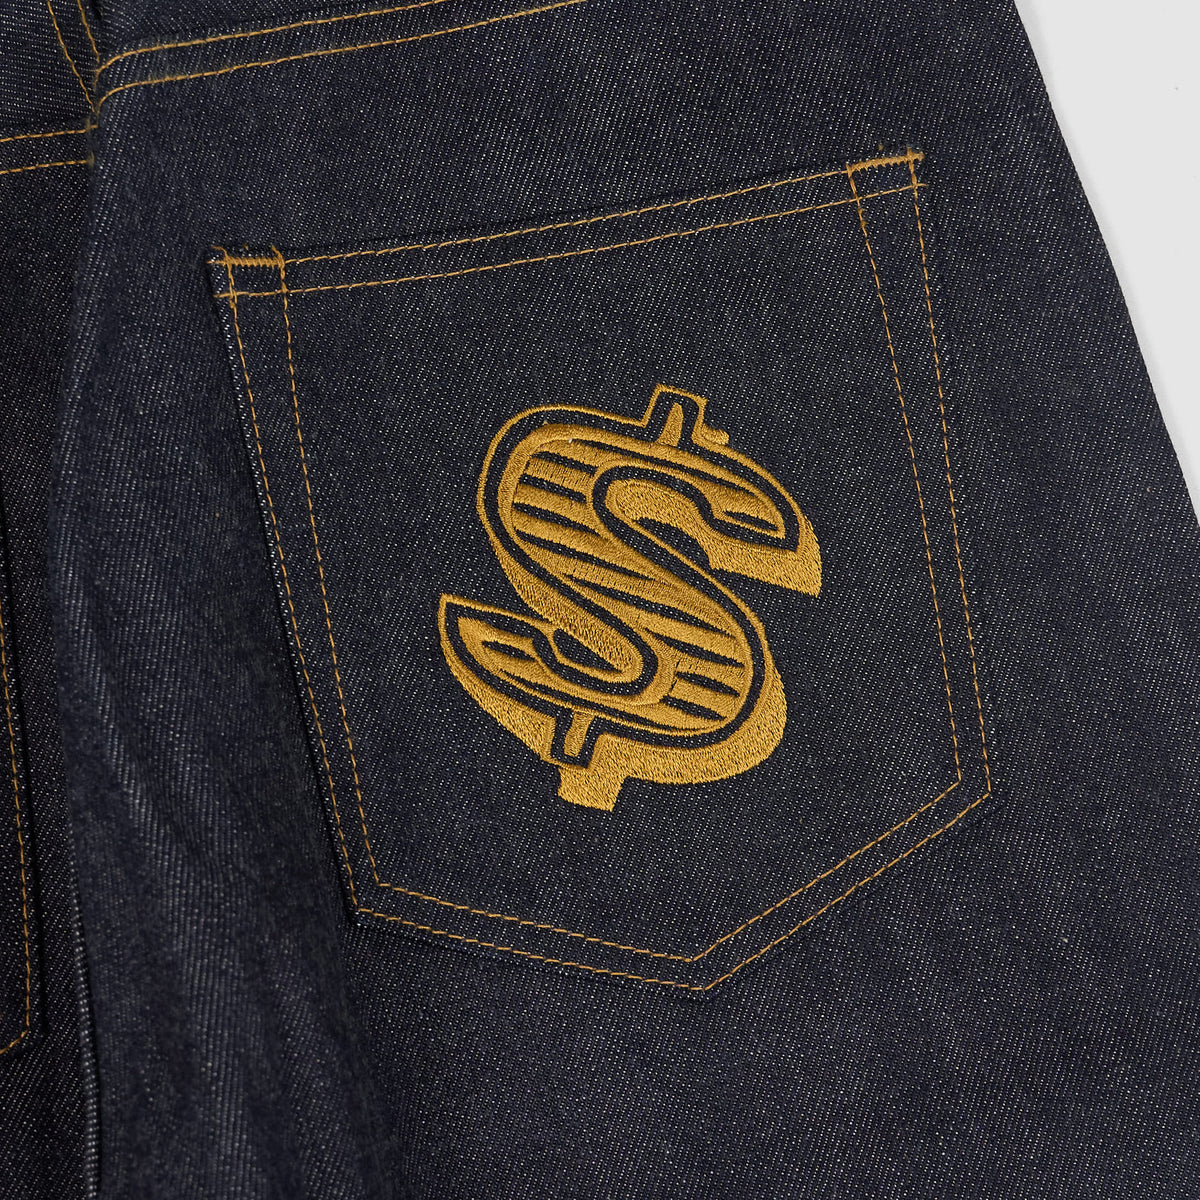 Billionaire Boys Club Embroidered Dollar Sign Raw Denim Jeans